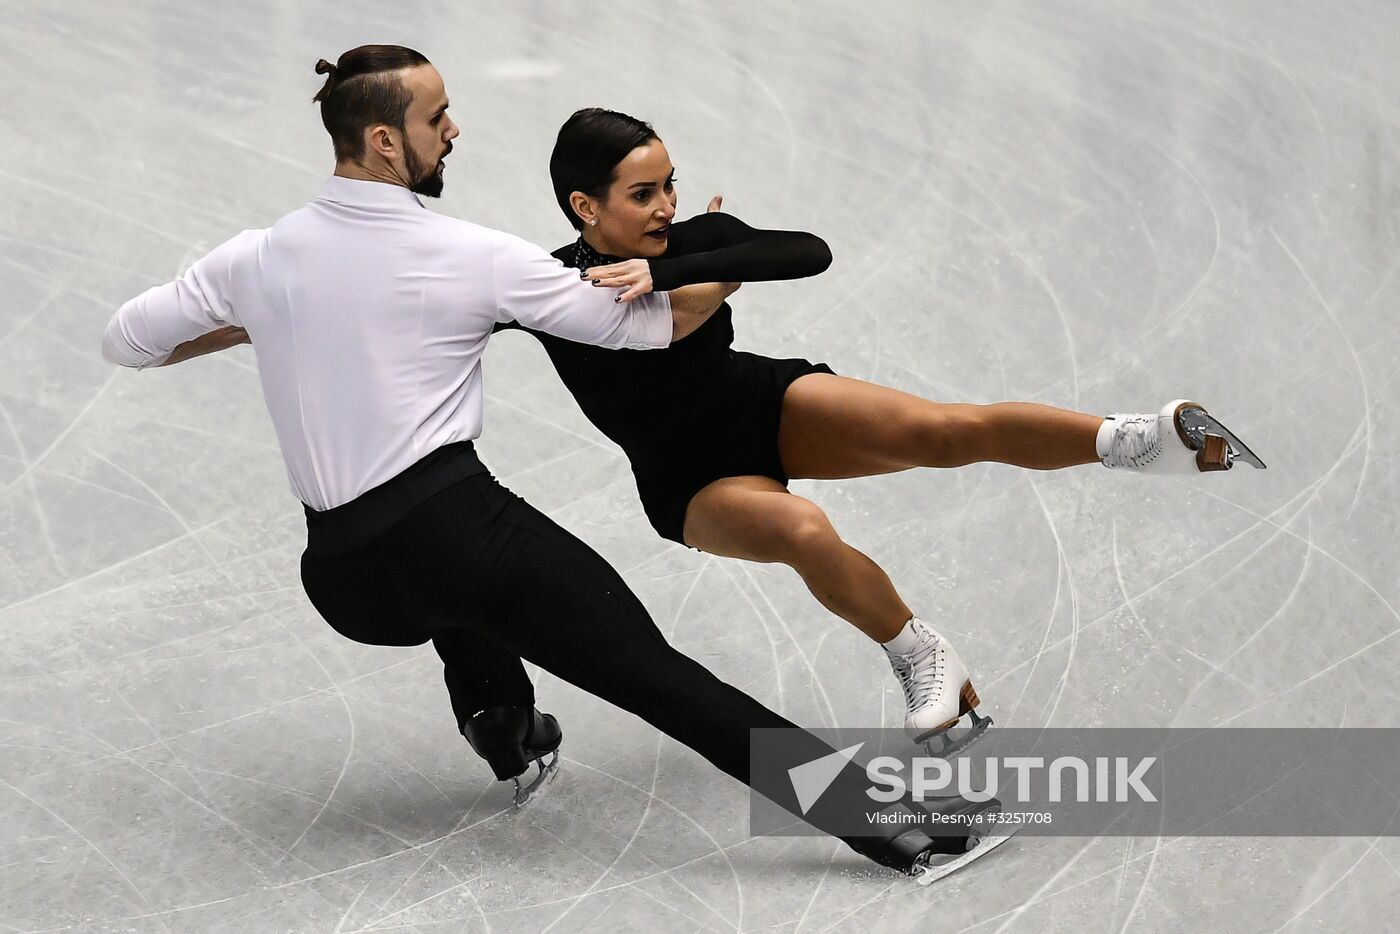 2017–18 Grand Prix of Figure Skating Final. Pair skating. Short program